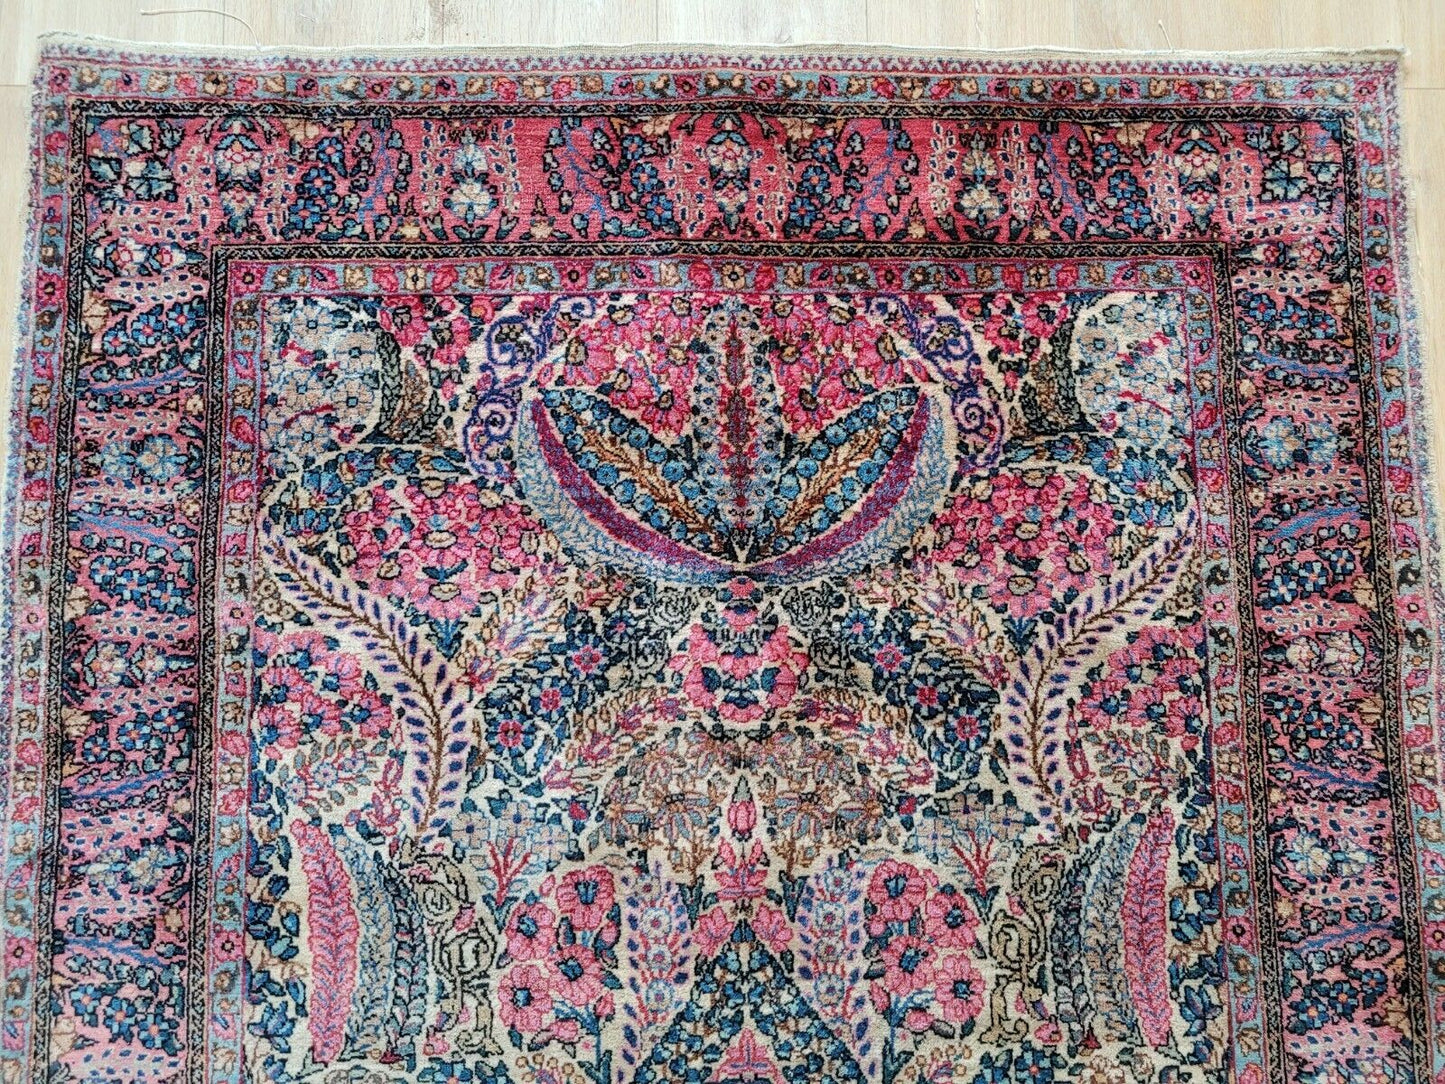 Handmade Antique Middle Eastern Kerman Rug 3.9' x 6.9' (120cm x 211cm), 1920s - 1L15